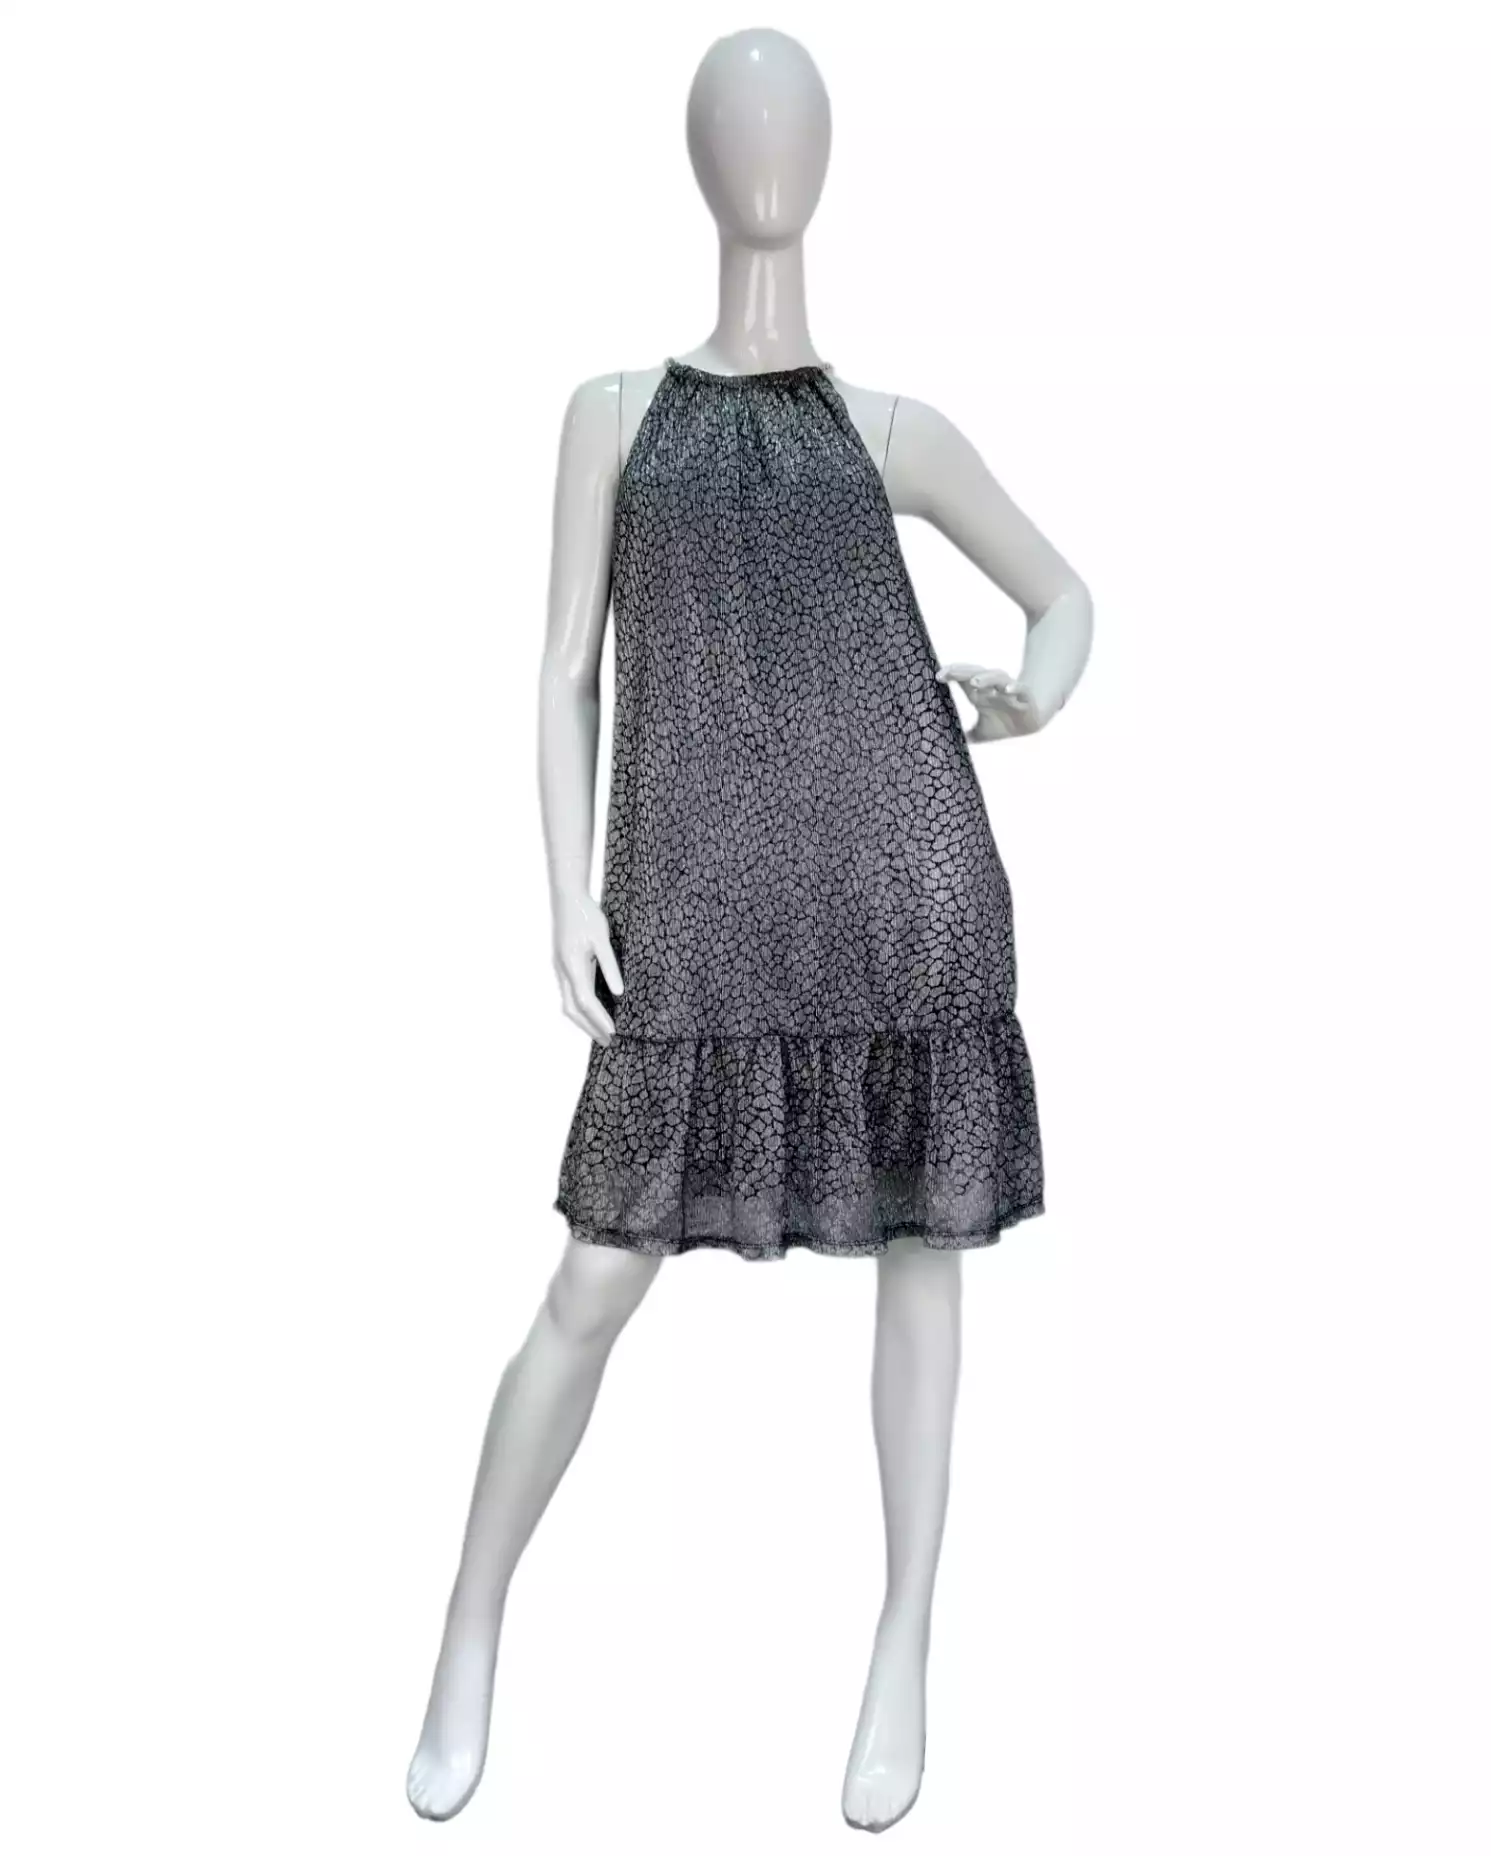 Dress by Michael Kors